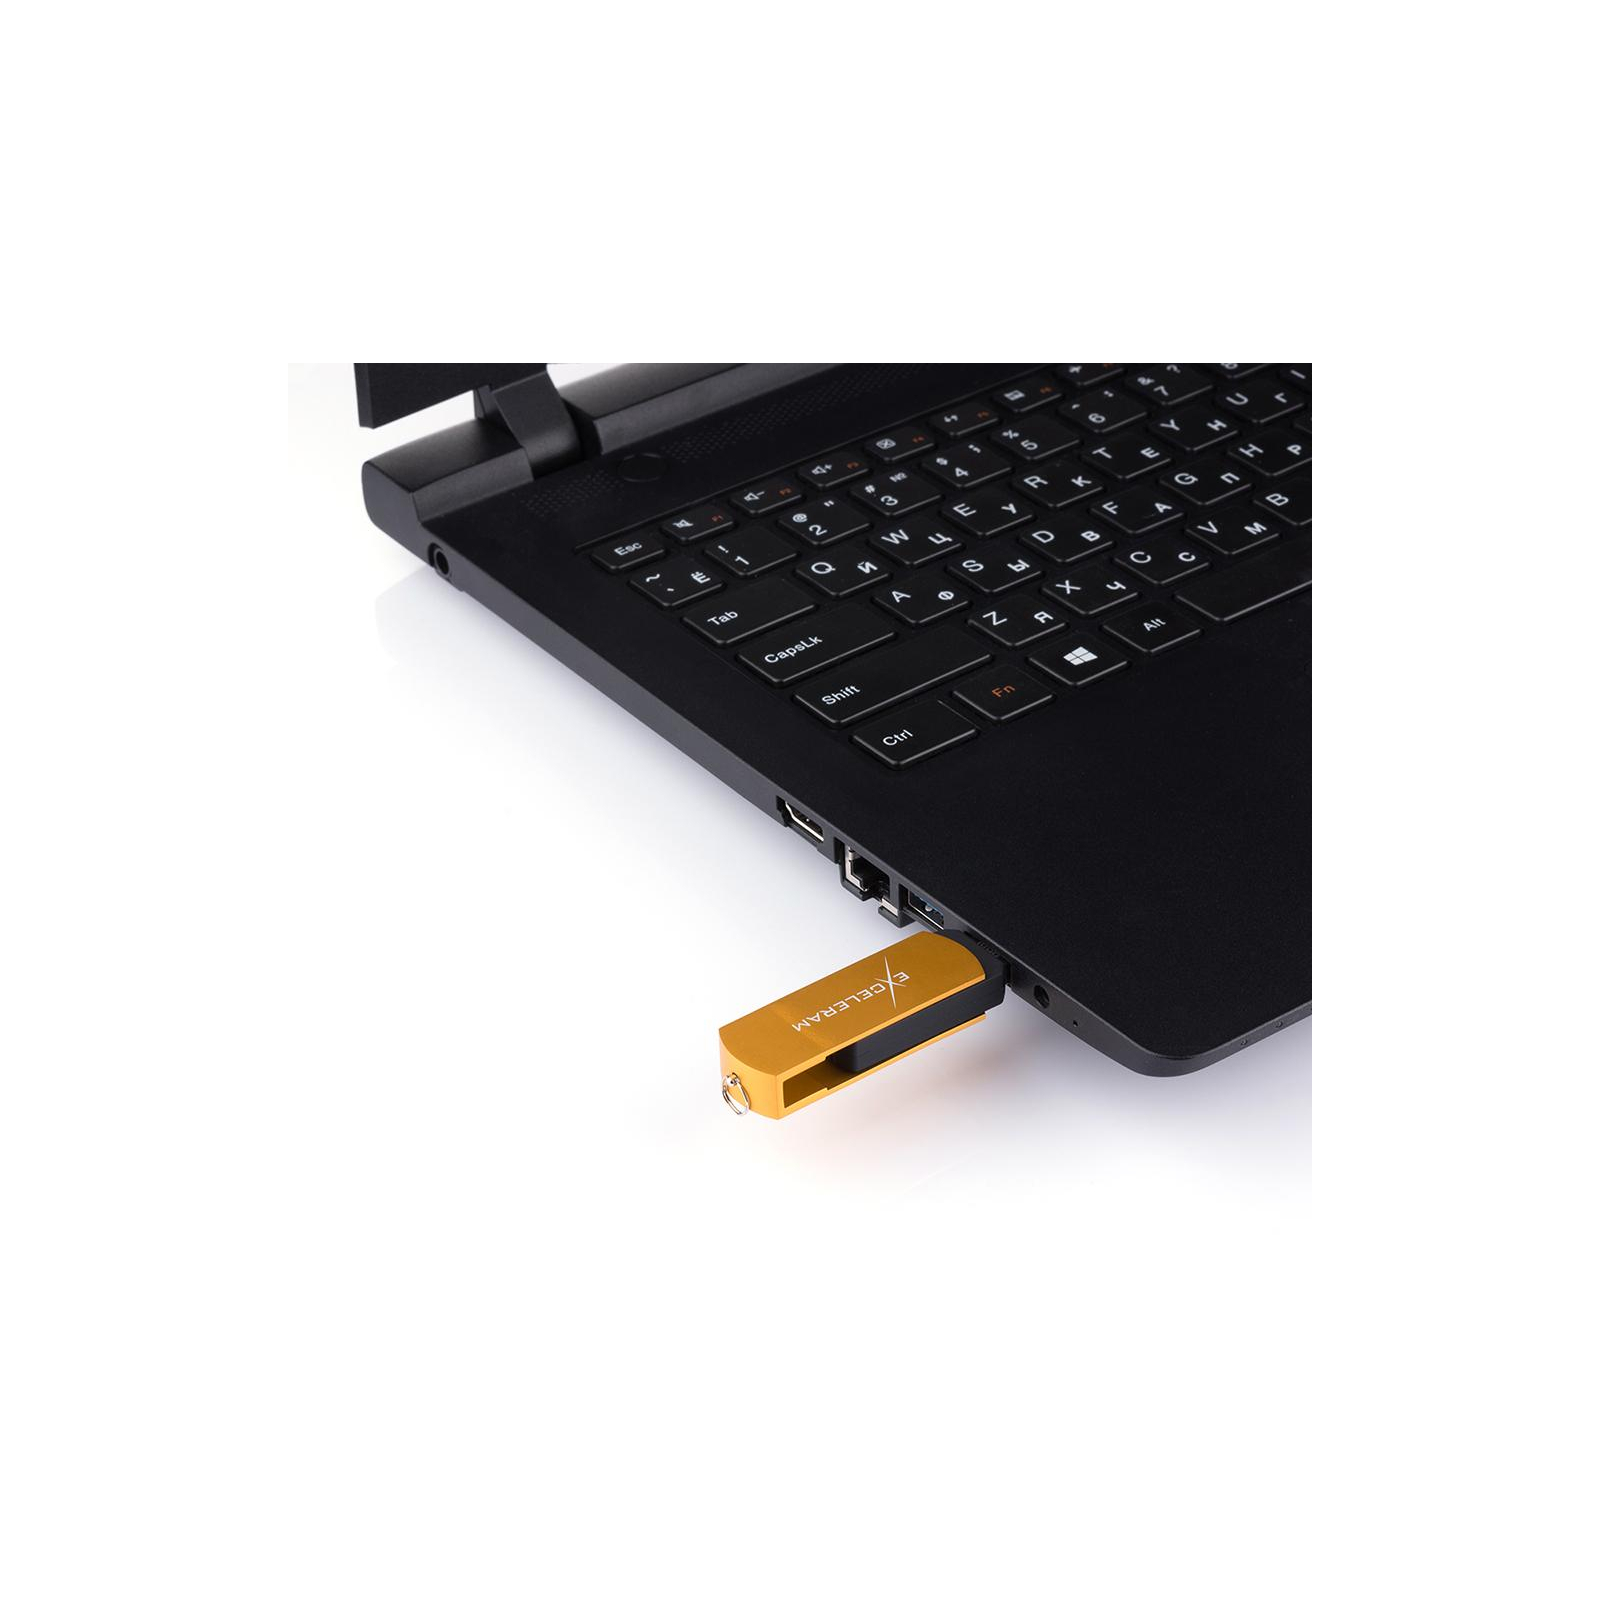 USB флеш накопитель eXceleram 32GB P2 Series Gold/Black USB 2.0 (EXP2U2GOB32) изображение 7